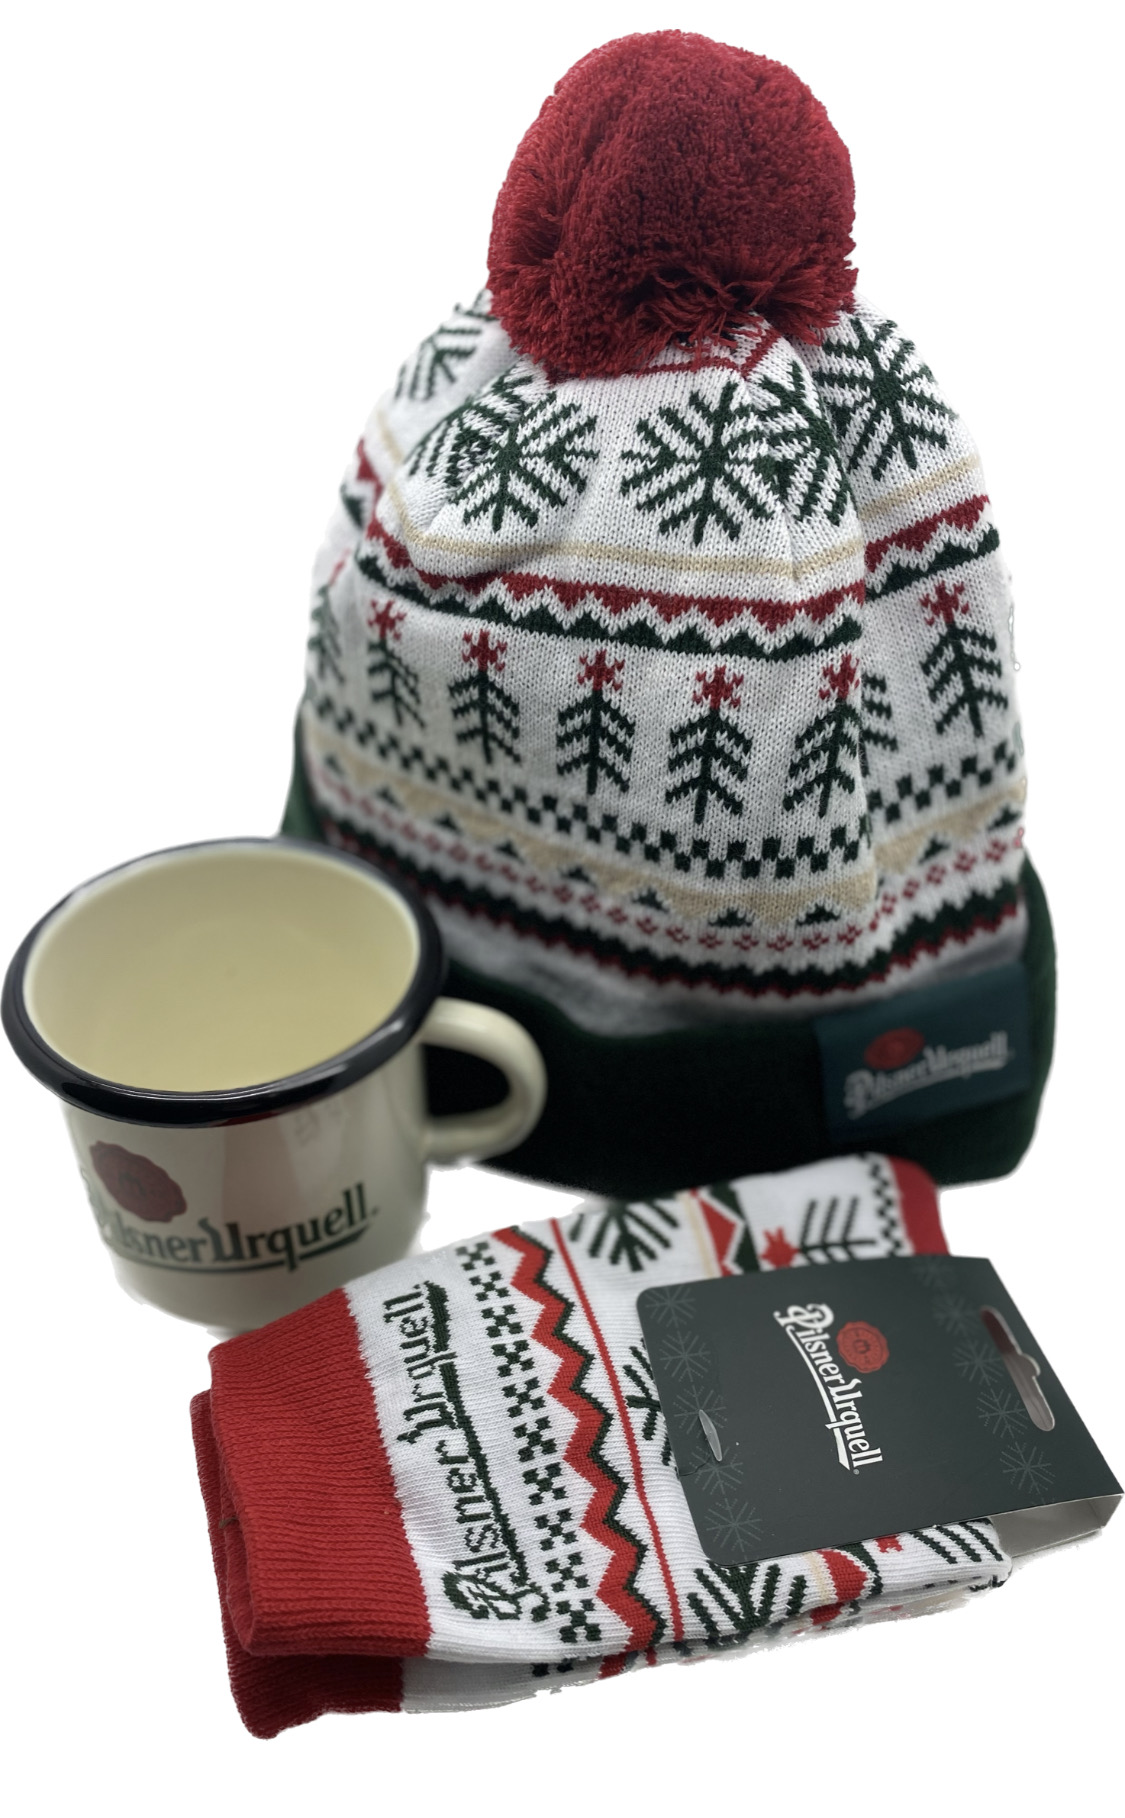 Pilsner Urquell warming gift pack for her